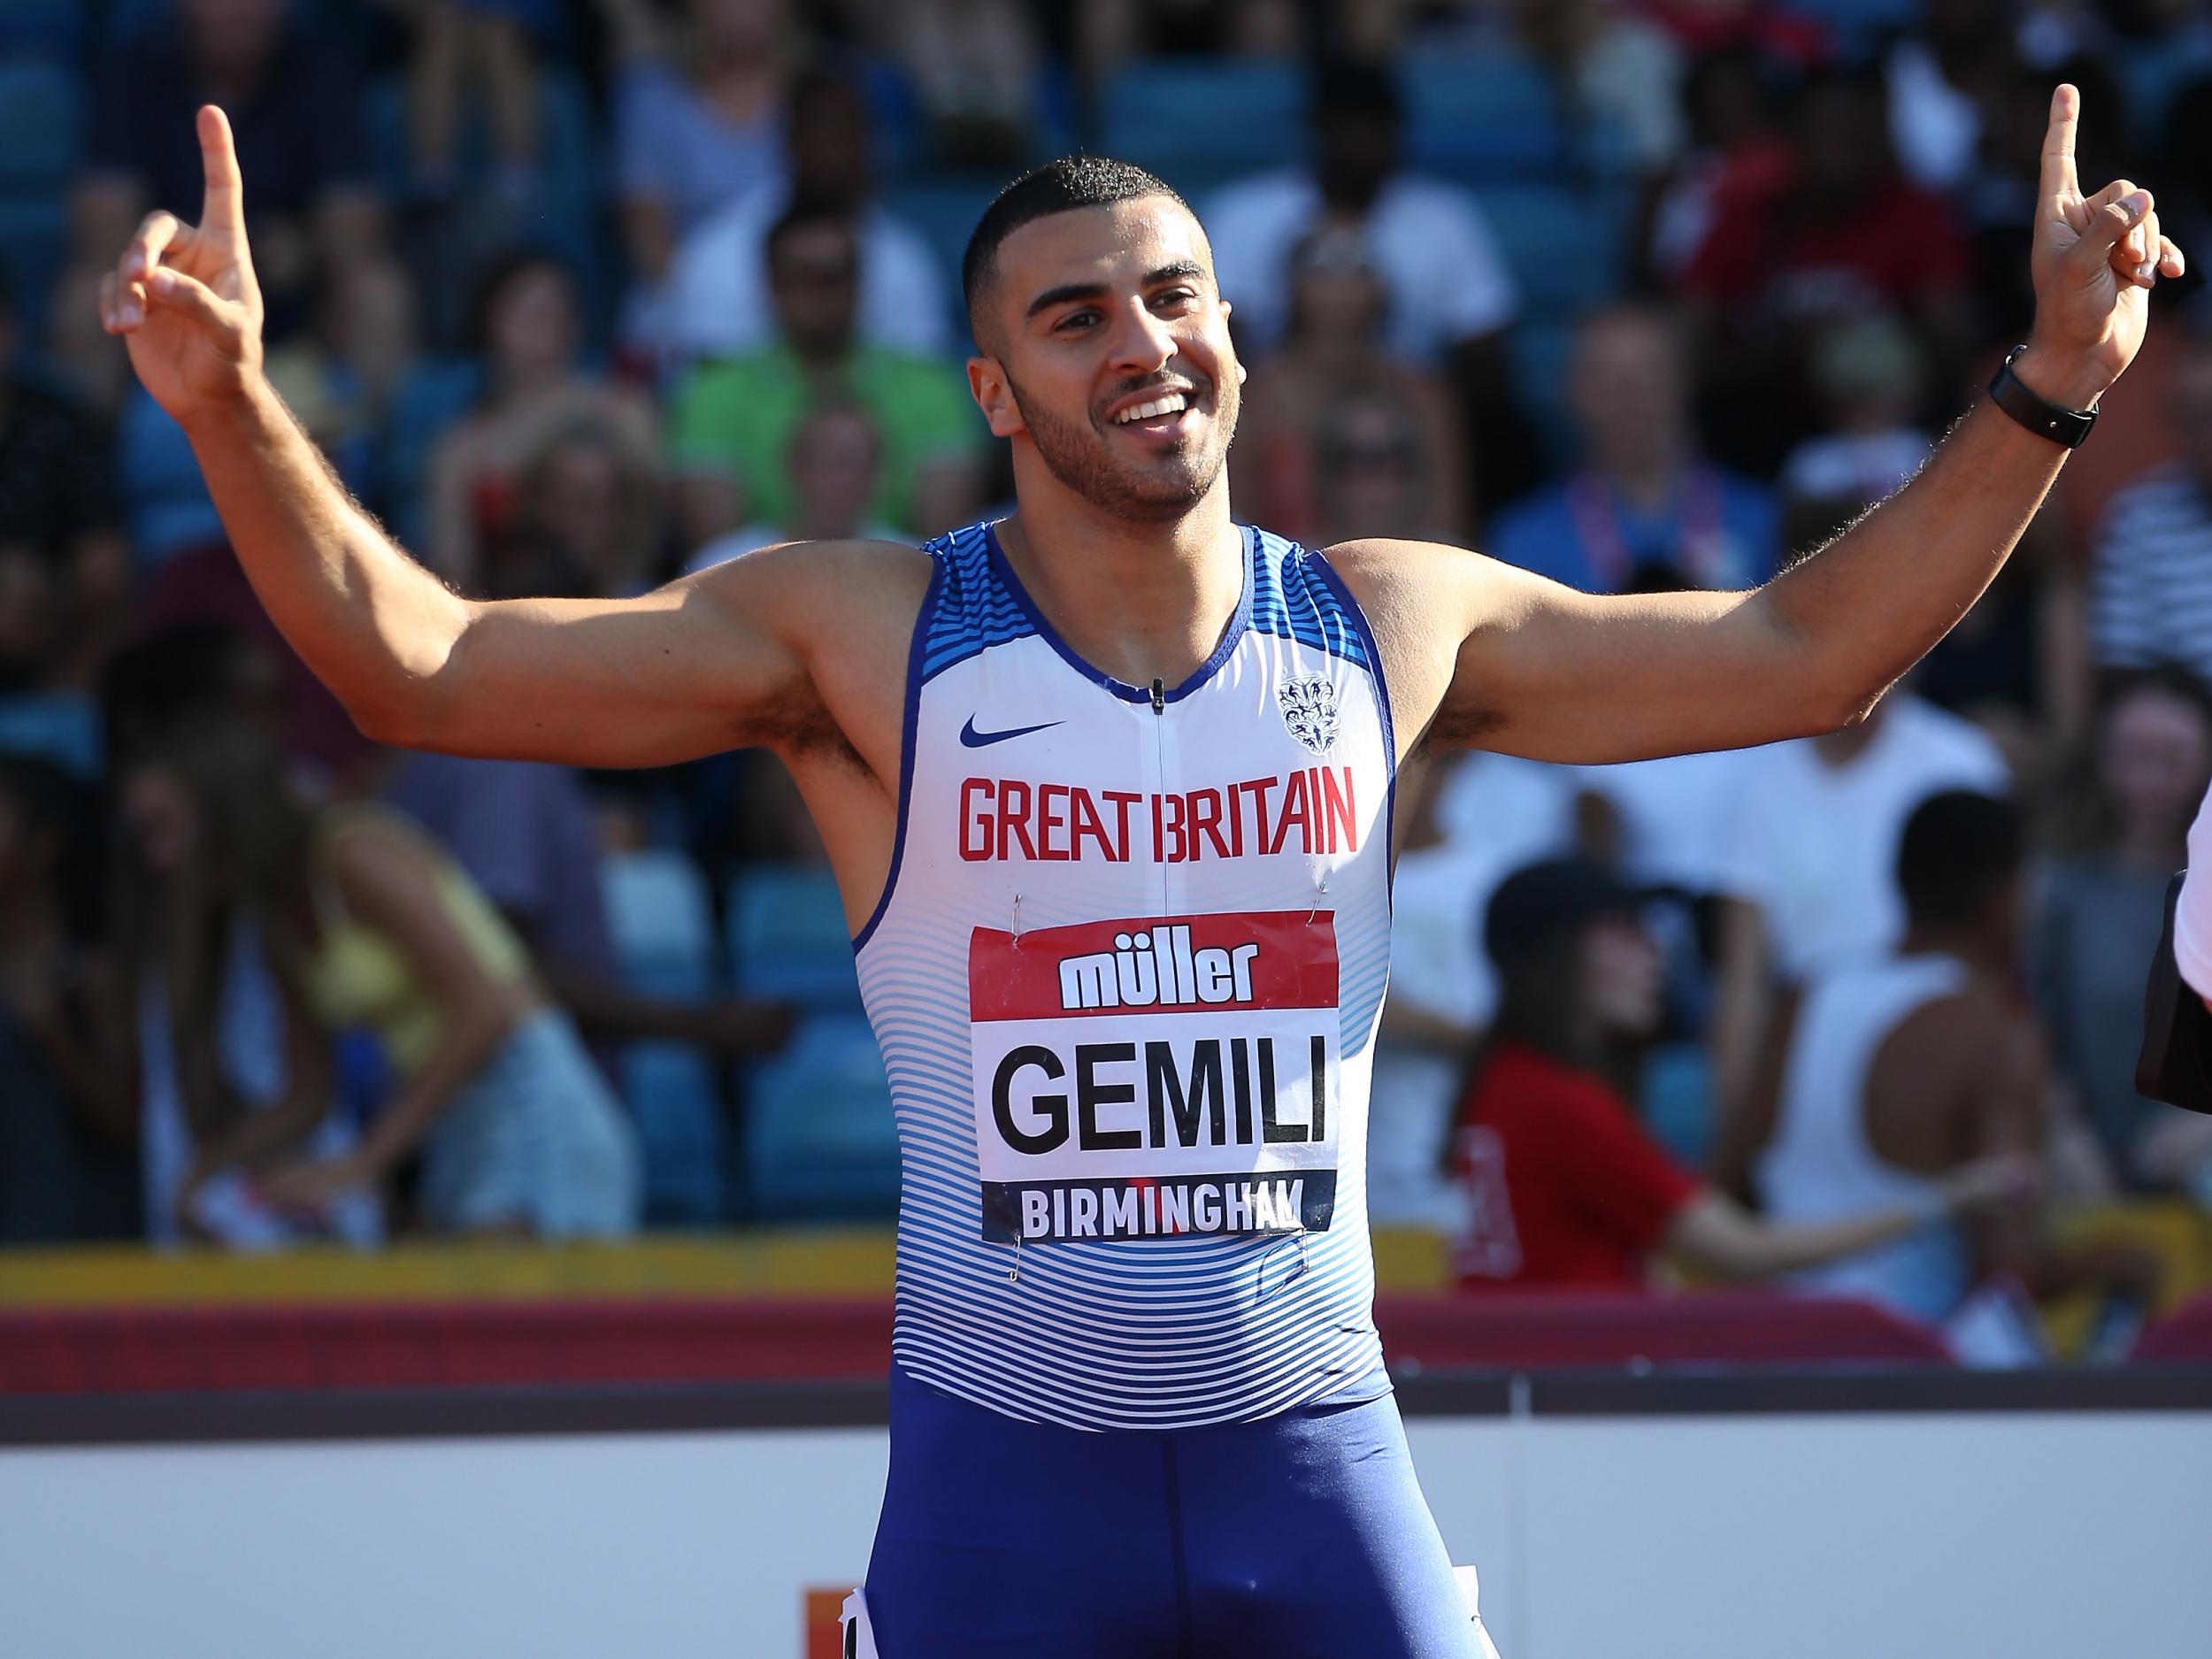 Gemili won the British 200m title this summer